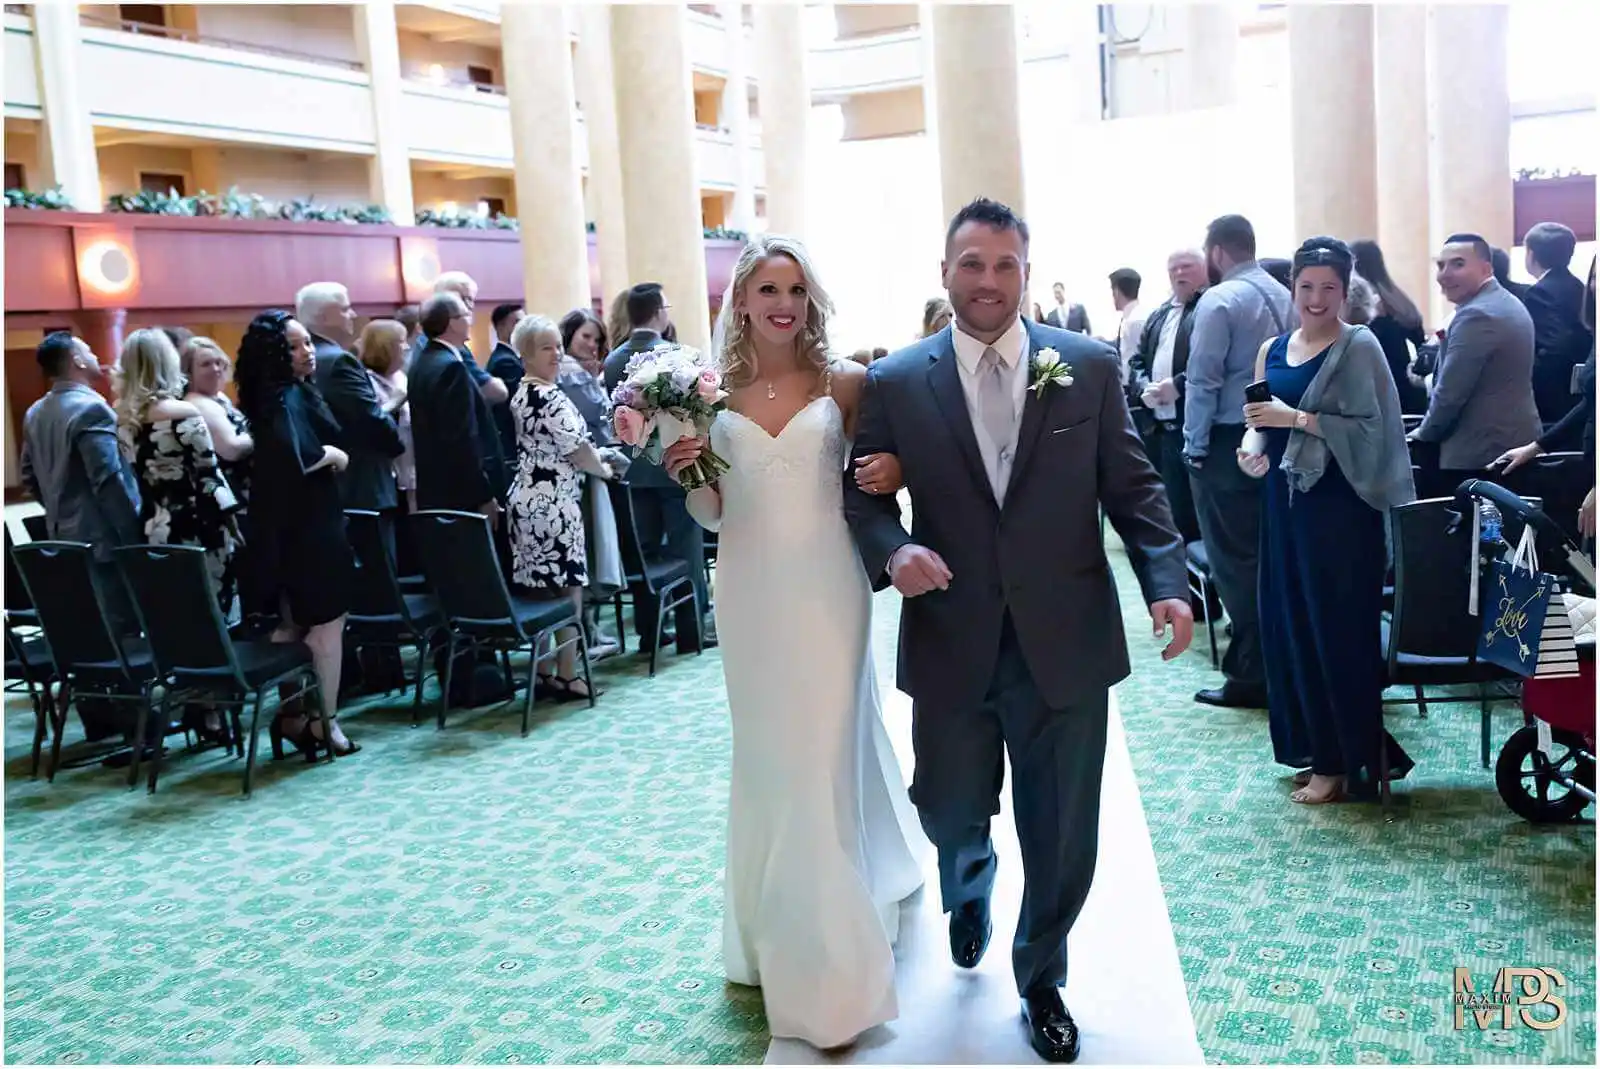 Radiant bride escorted by father on her wedding aisle walk Marriott Rivercenter Covington KY